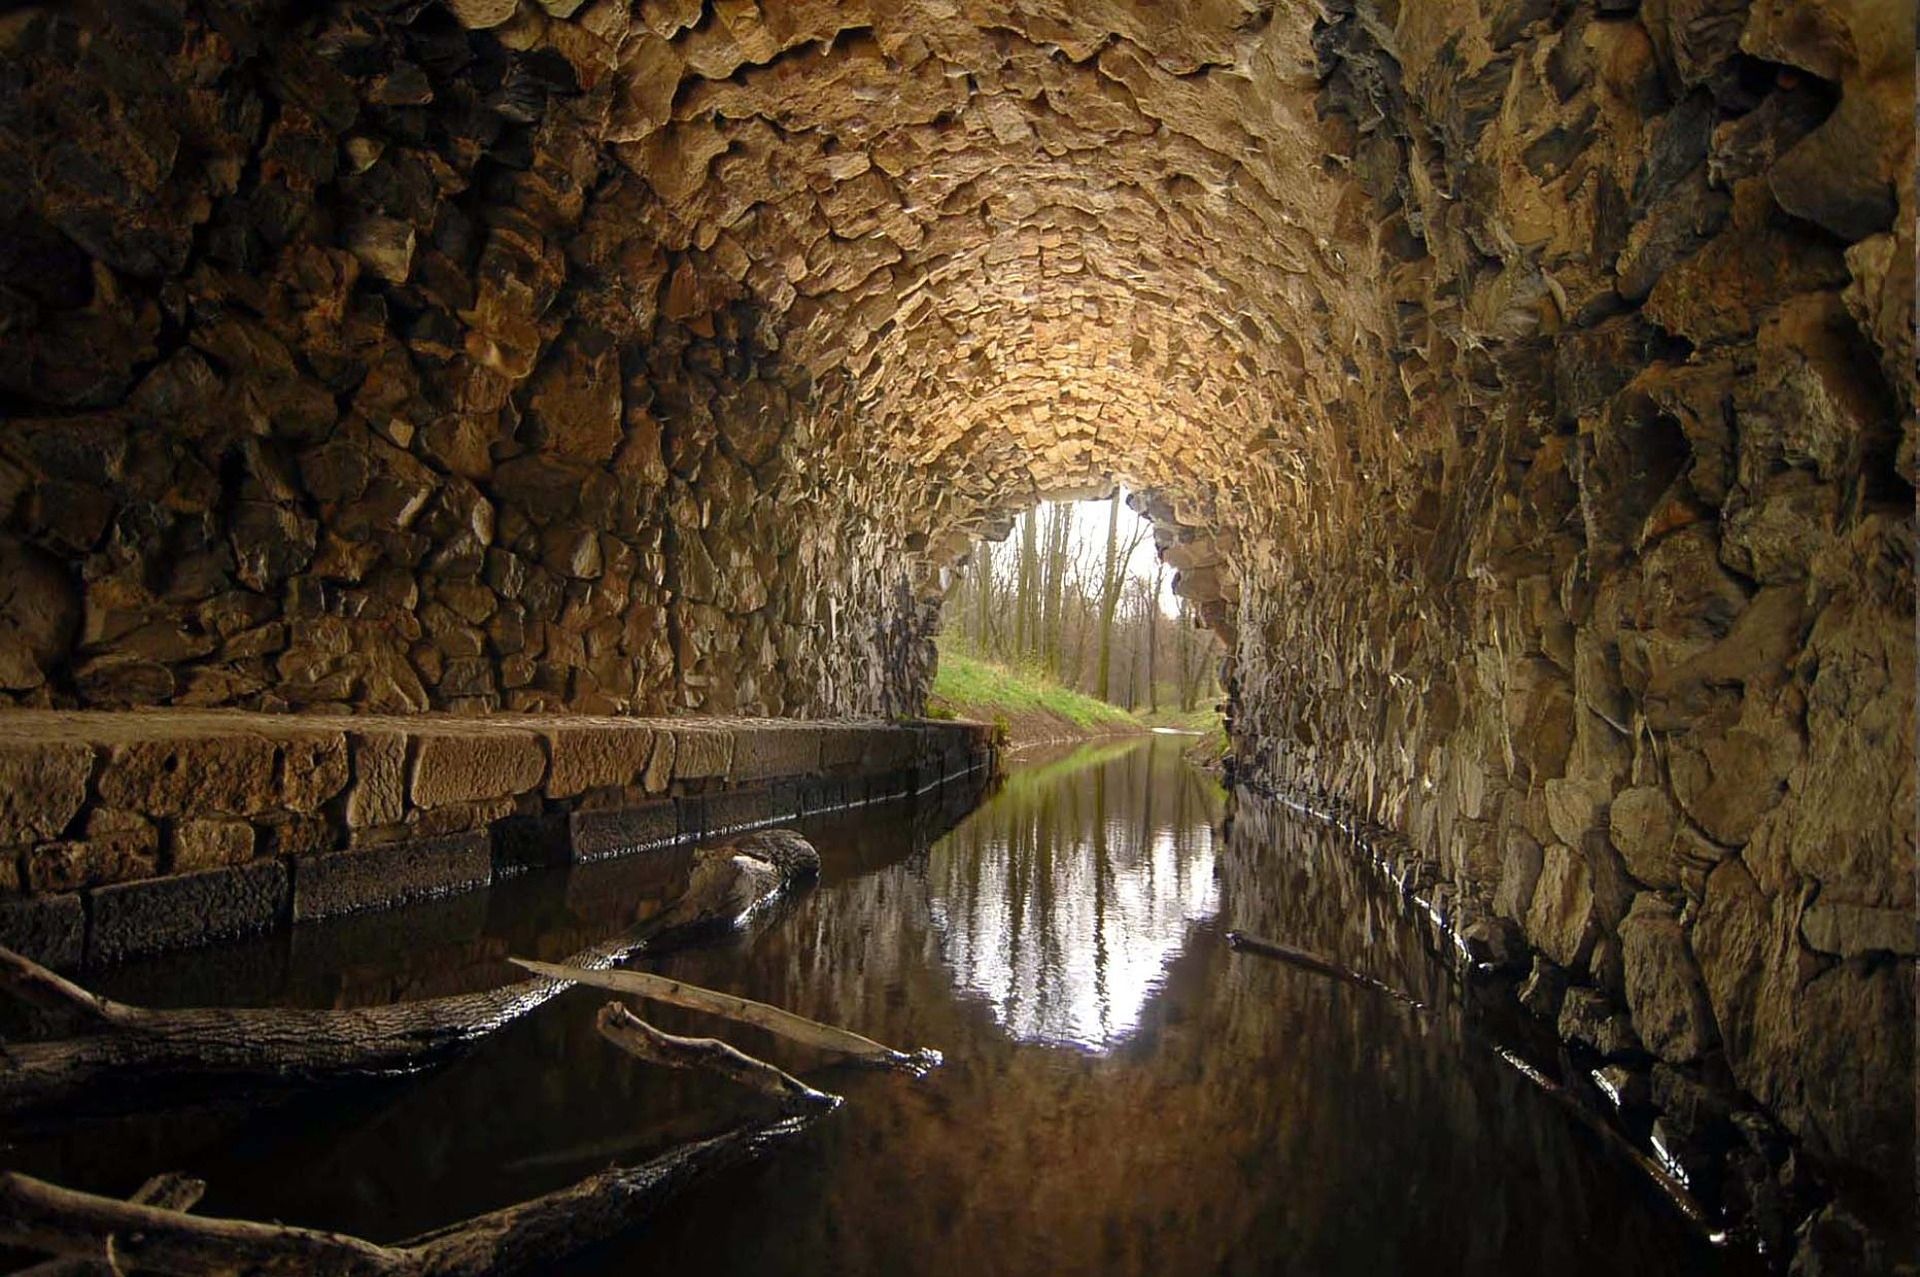 sewer water way made of brick